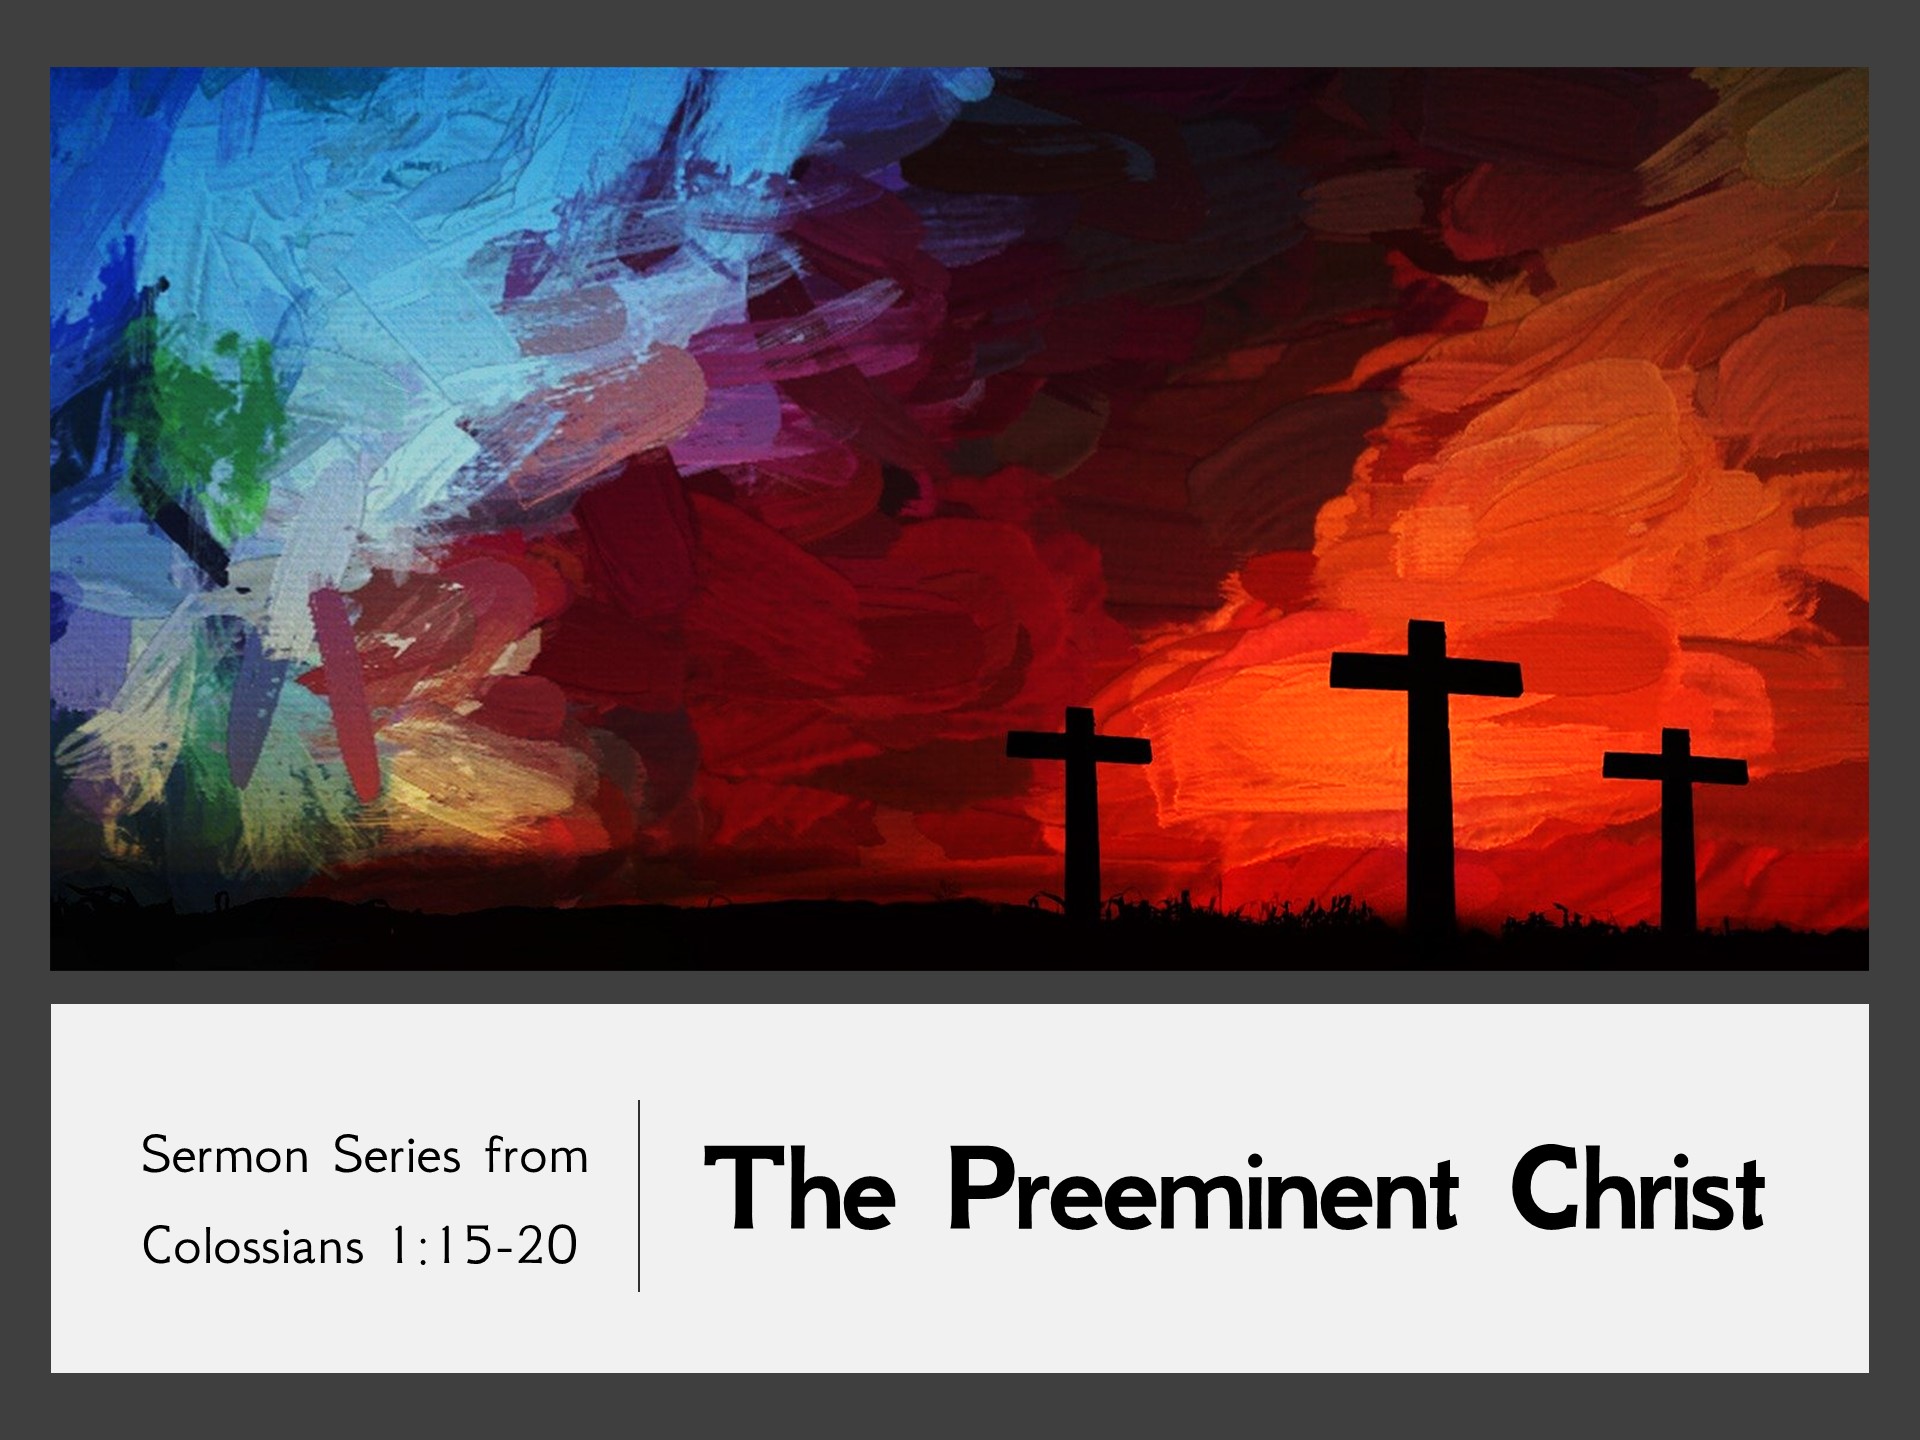 The Risen Preeminent Christ